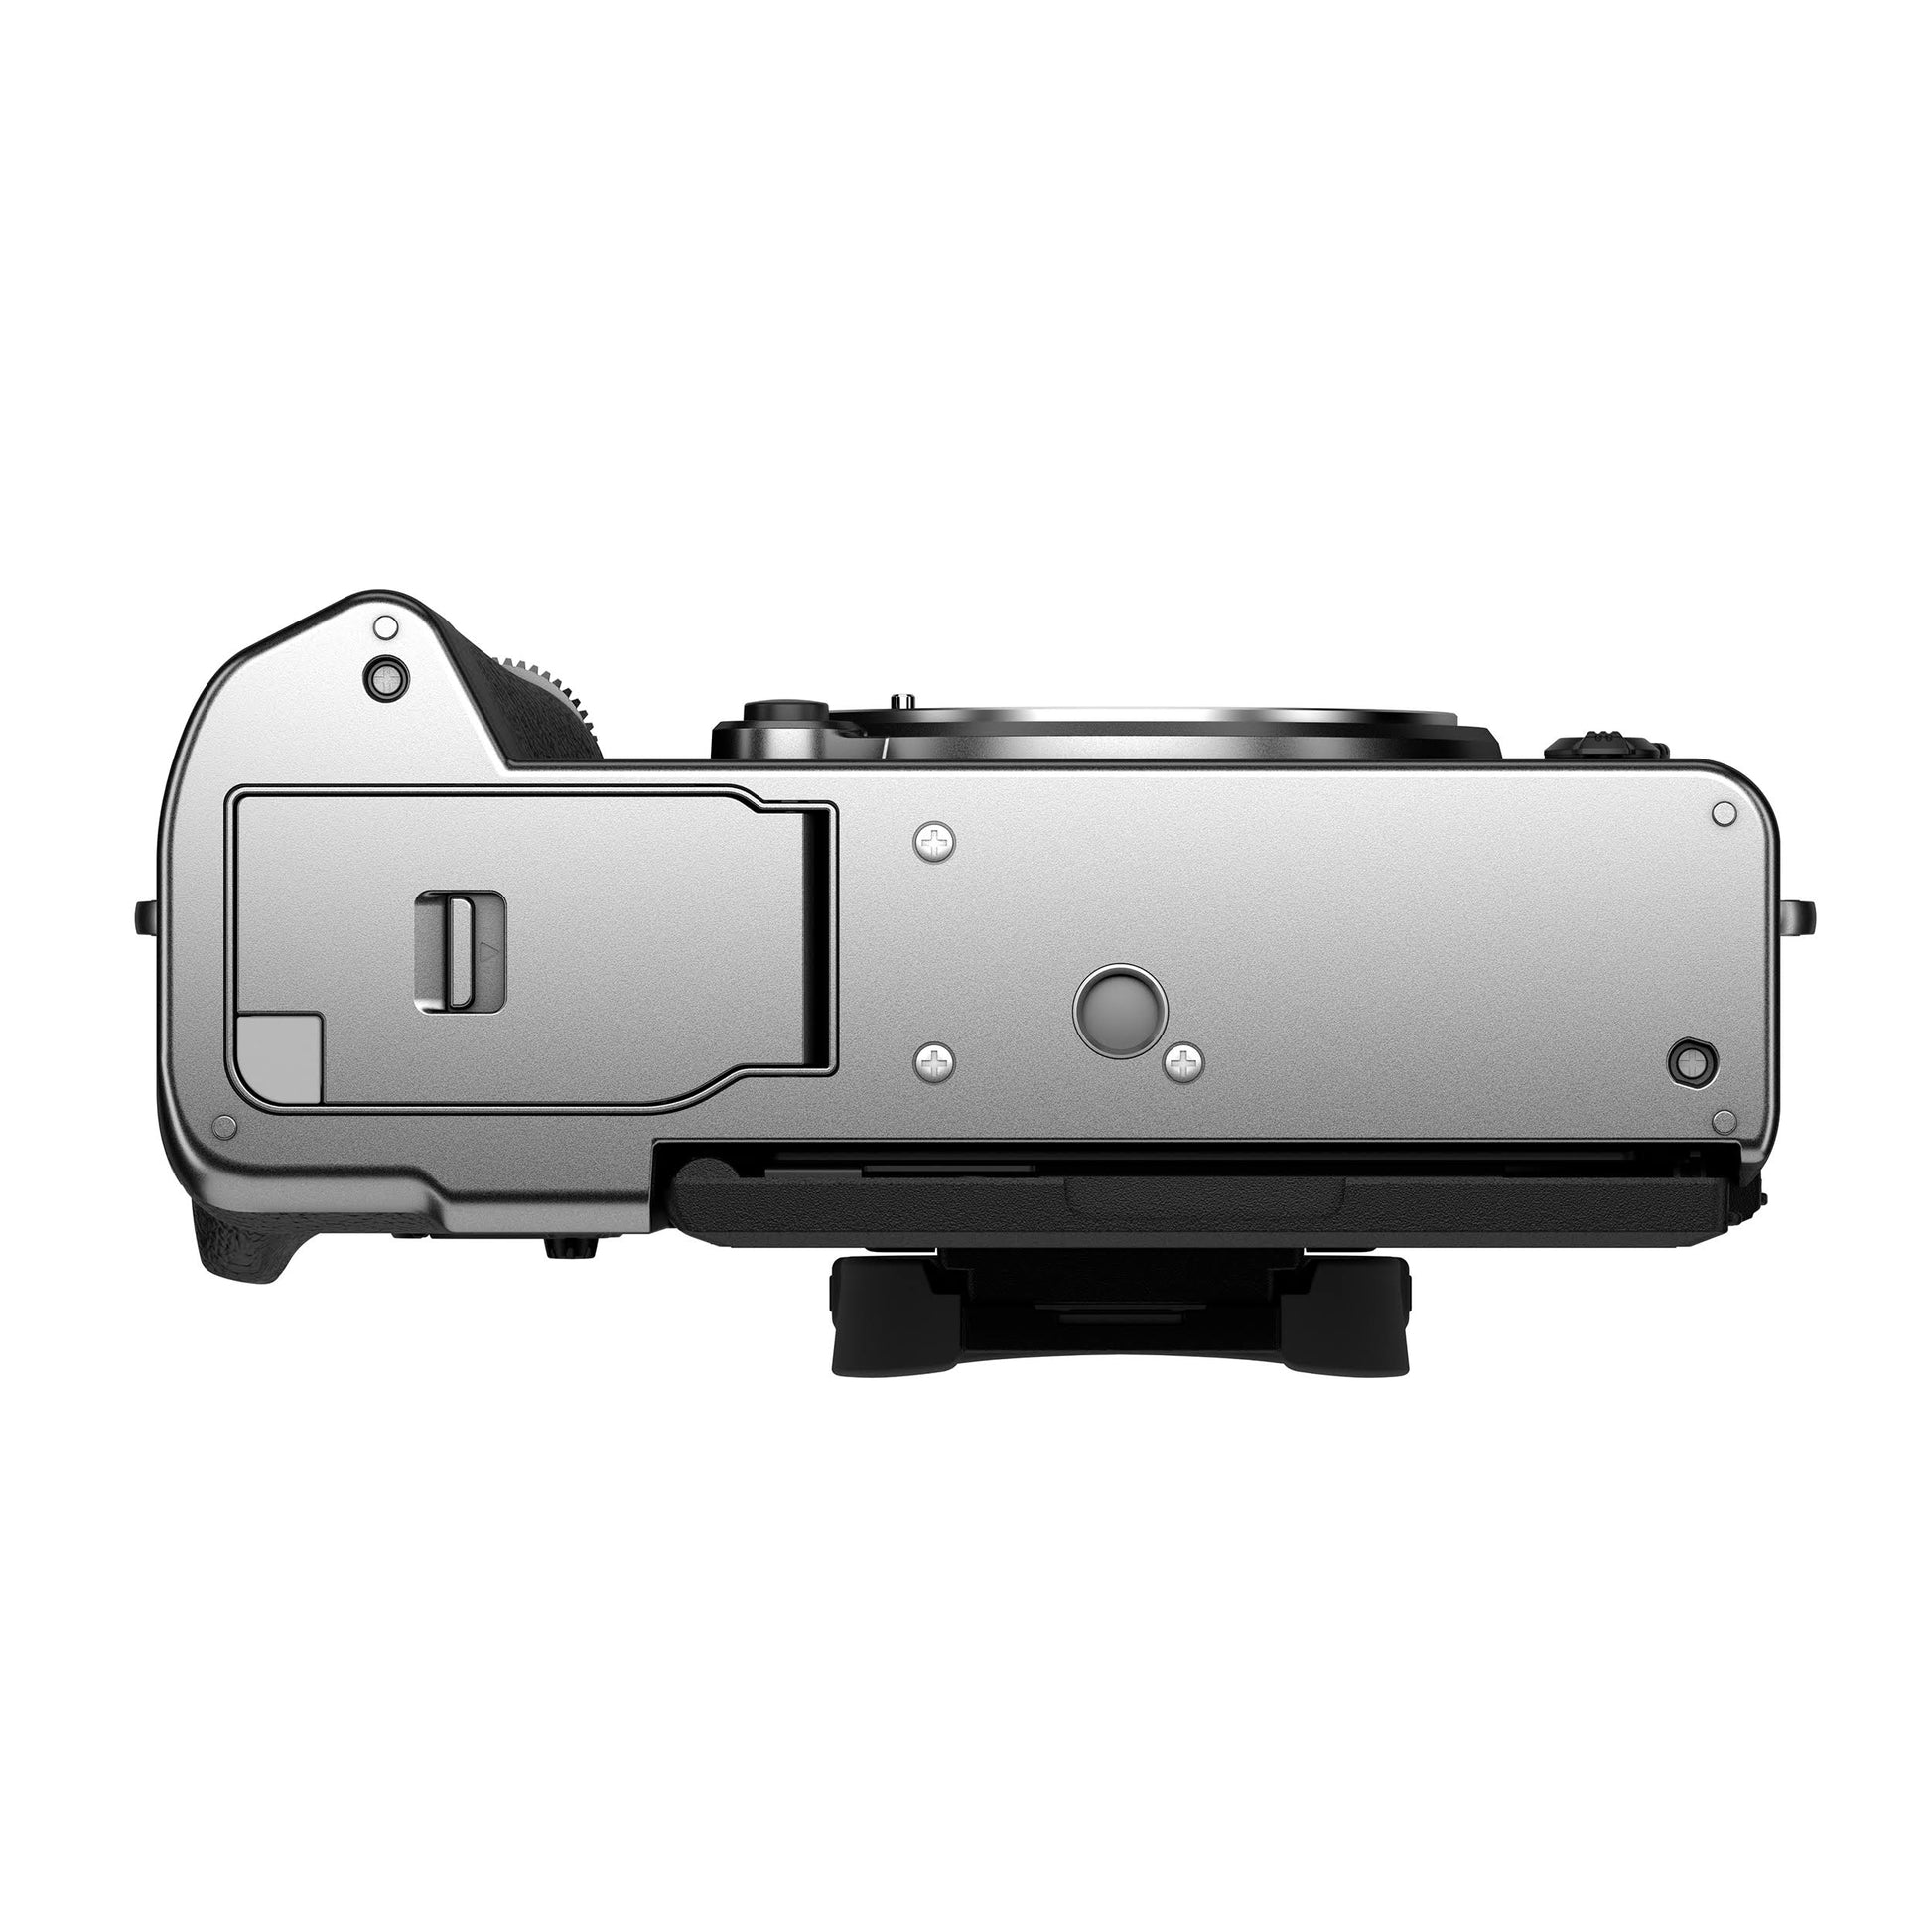 Fujifilm - X-T5 Mirrorless Camera Body - Silver